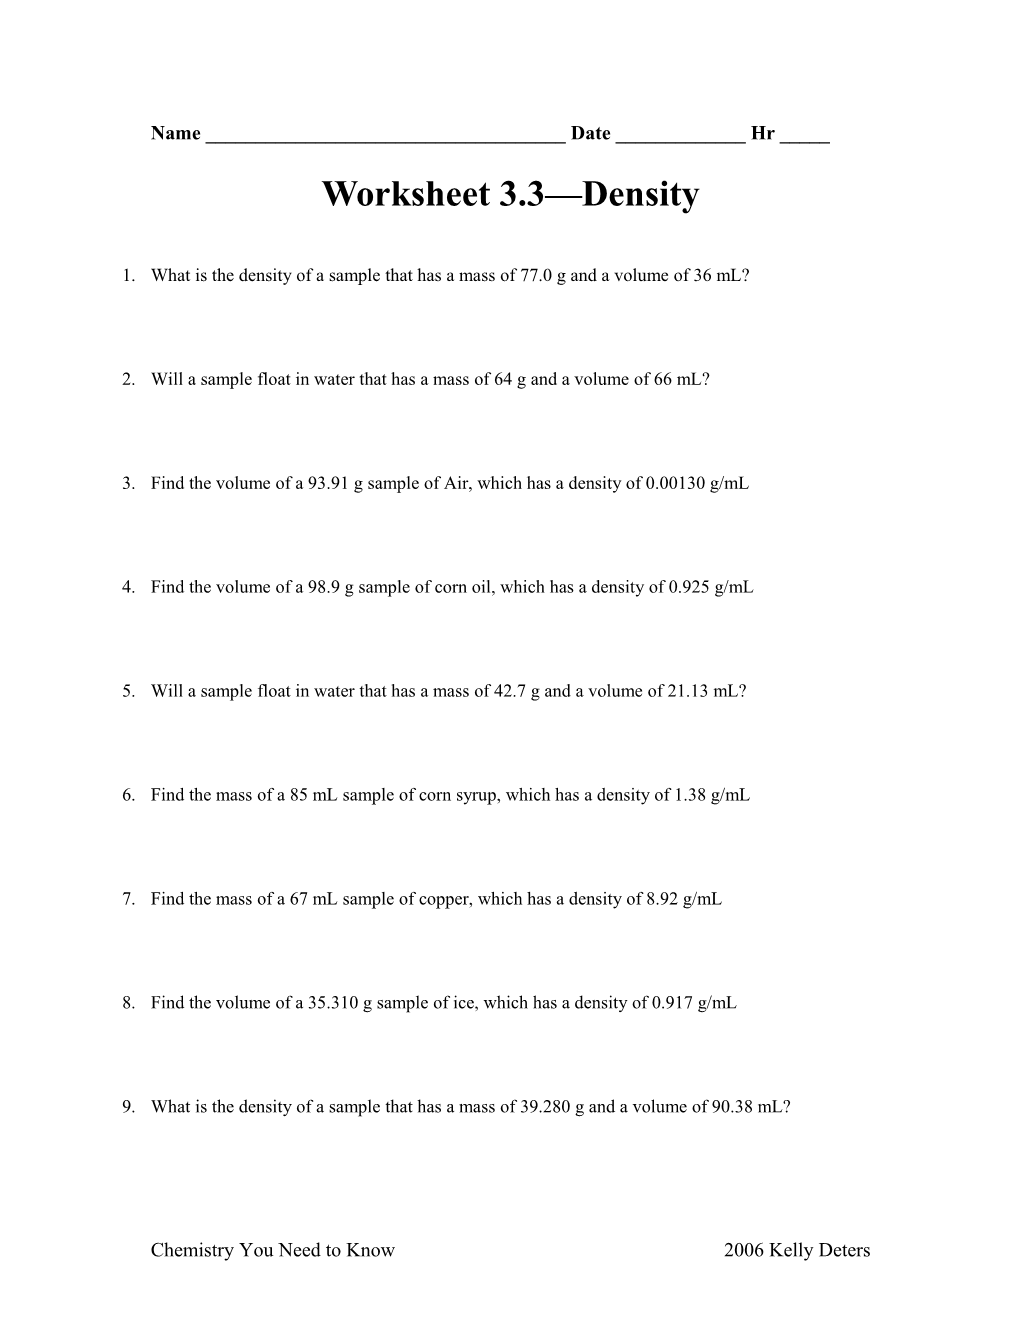 Worksheet 3.3 Density